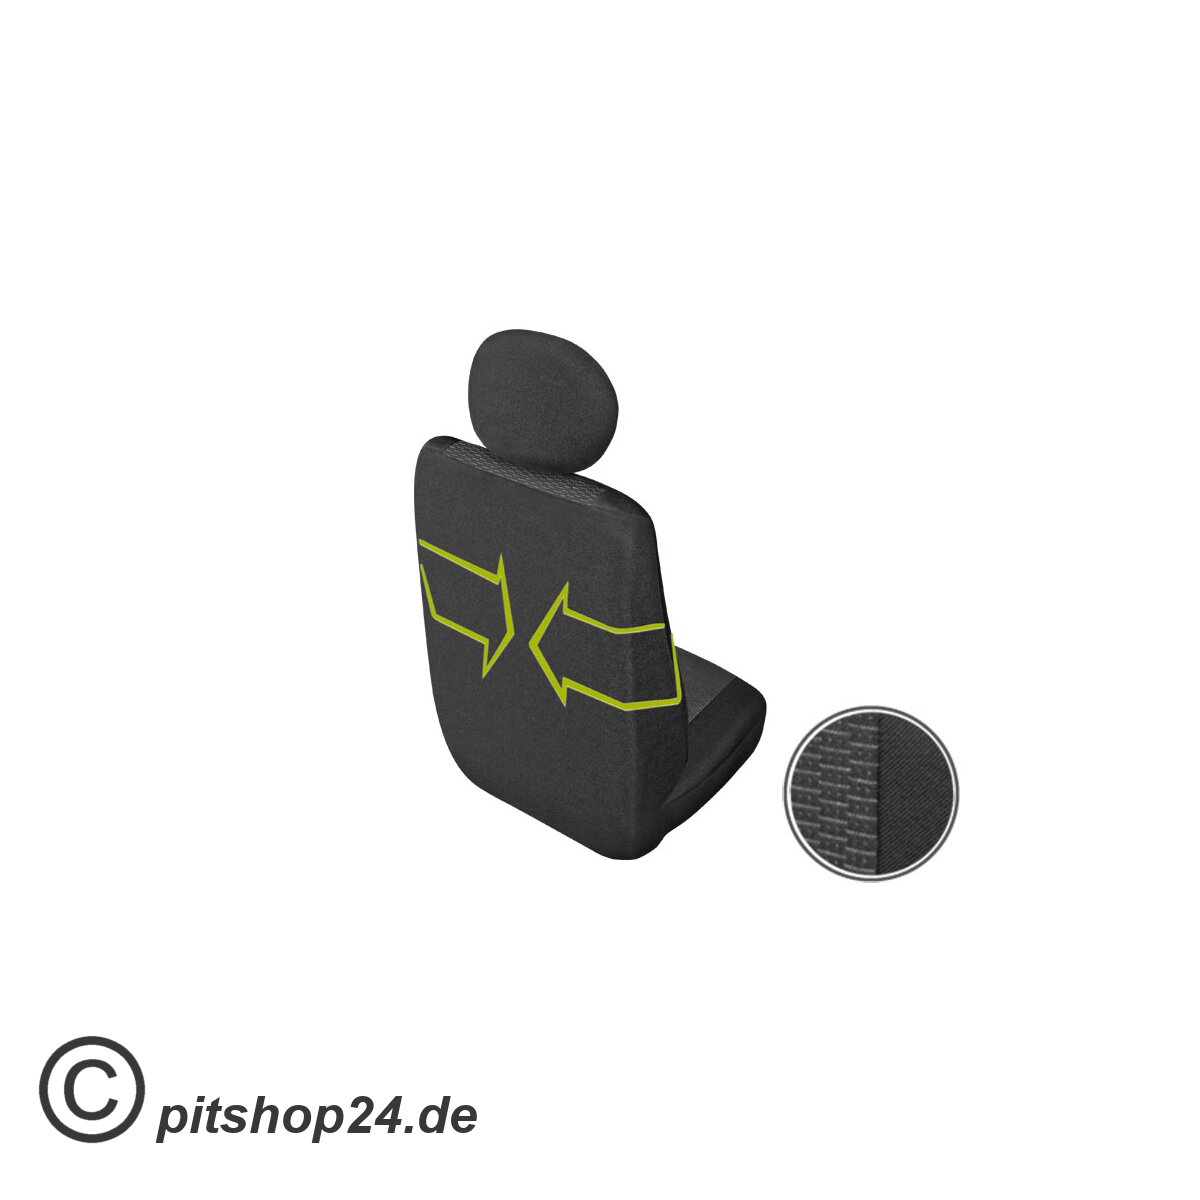 https://pitshop24.de/media/image/product/1190/lg/renaul-trafic-3-mass-front-einzelsitzbezuege-fahrer-beifahrer-sitzschoner~2.jpg